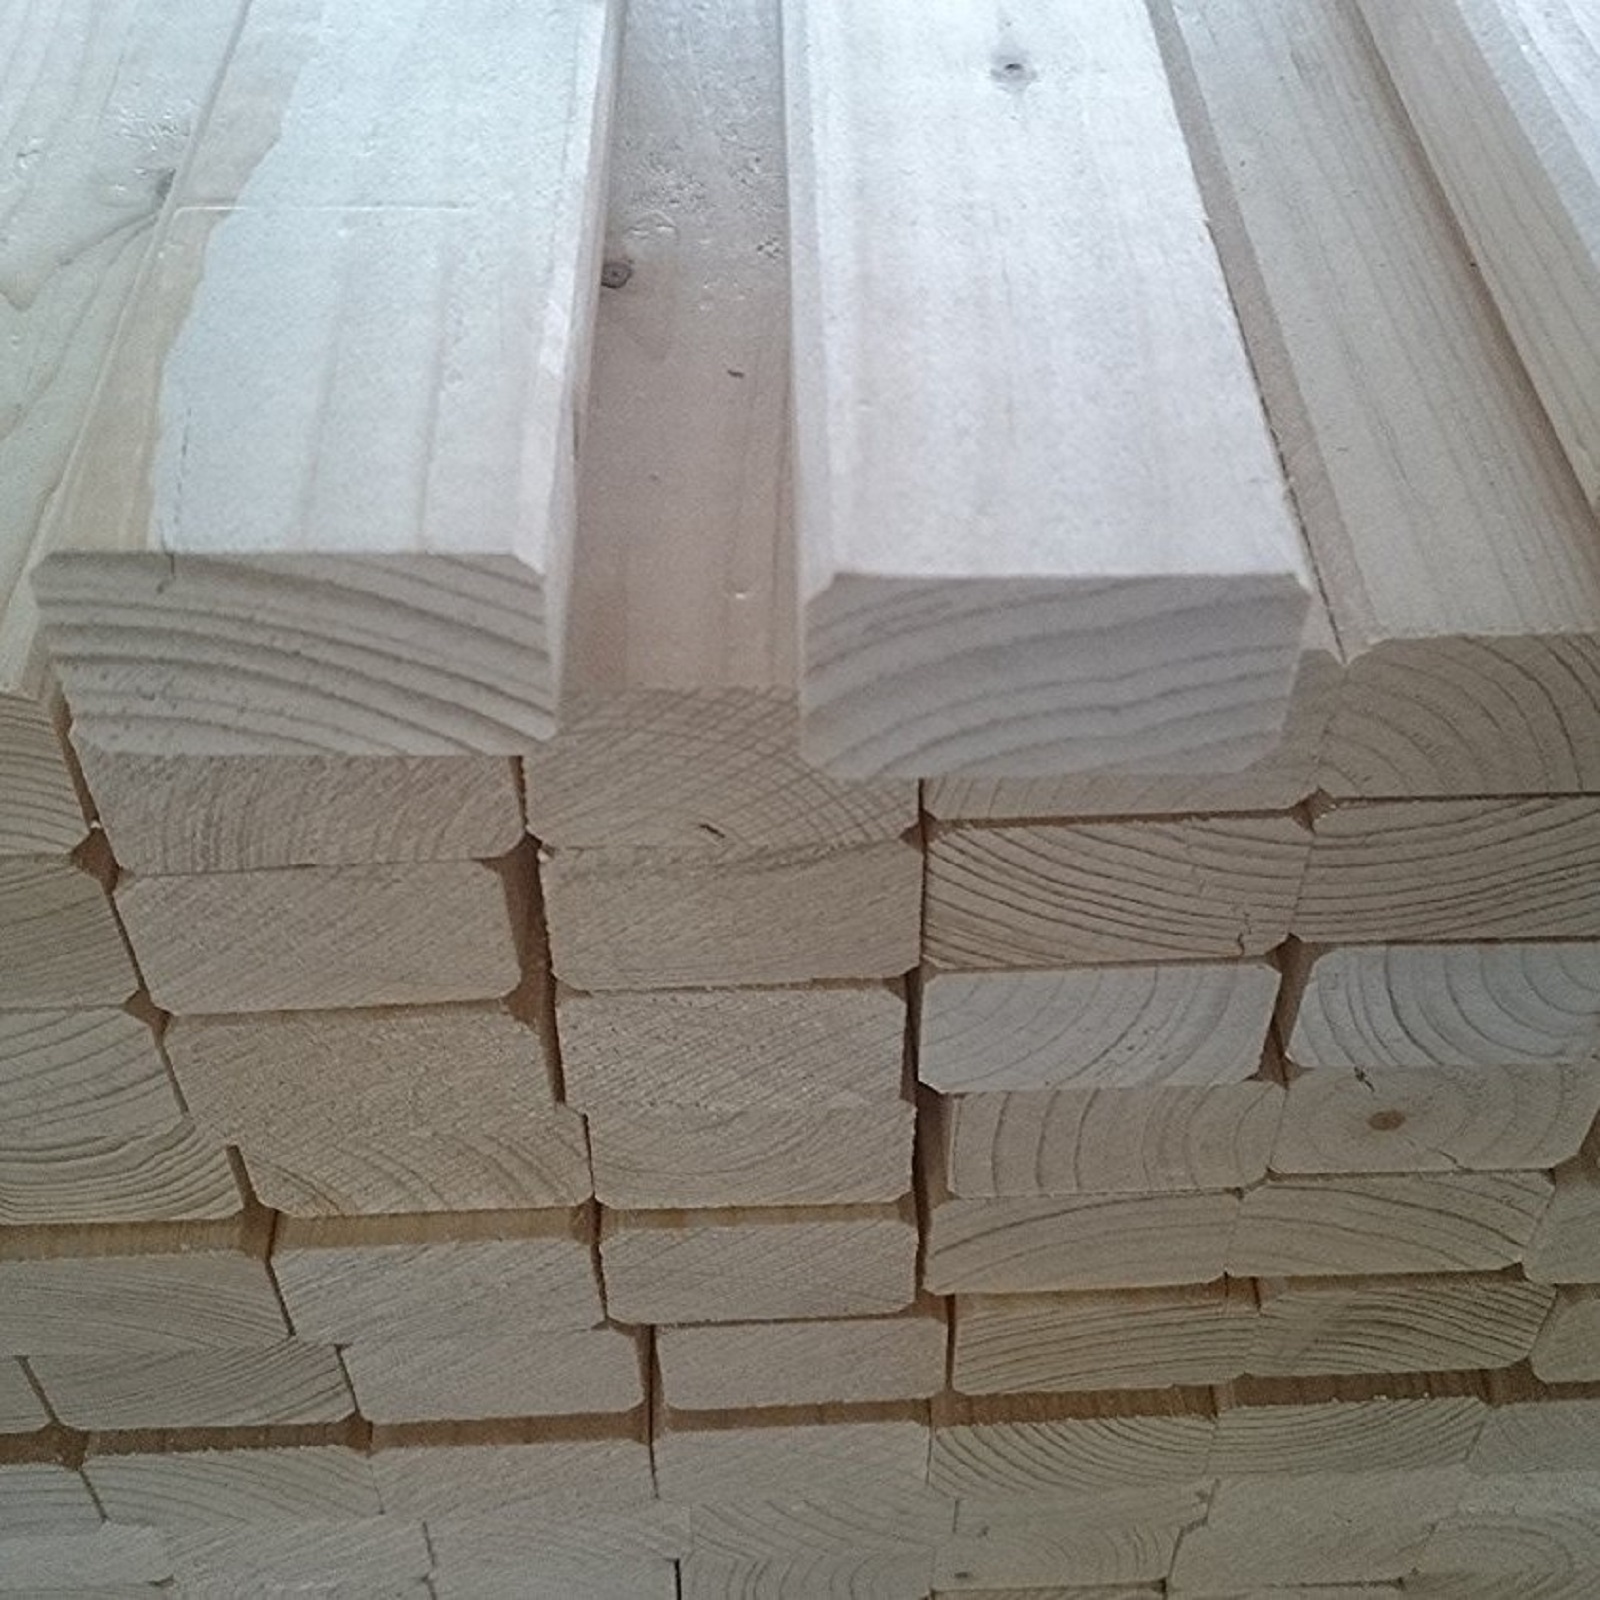 10 Stück Rahmenholz Fichte B-Ware 24x44mm 2,00m Holz Holzbalken Bauholz KVH